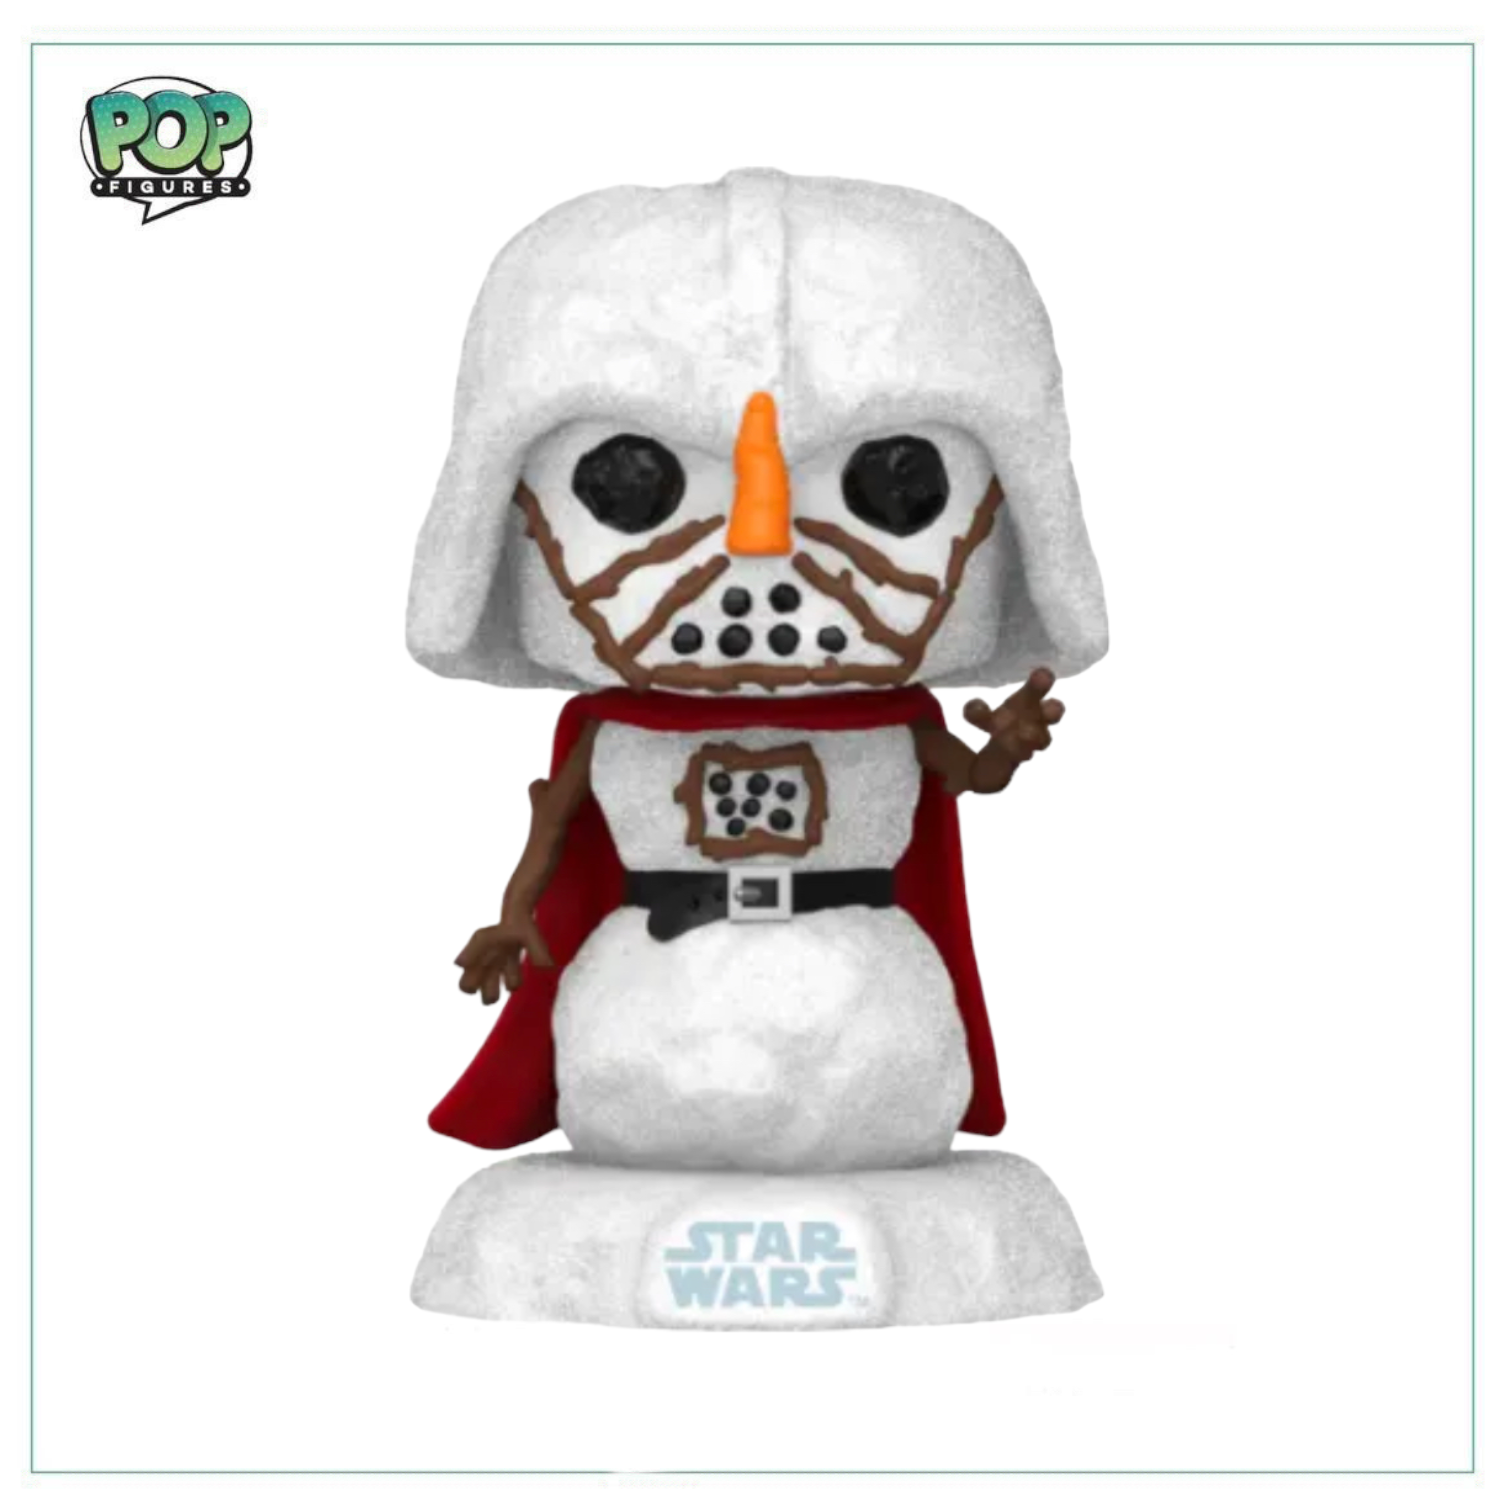 Darth Vader #556 Funko Pop! Star Wars - Snowman Edition